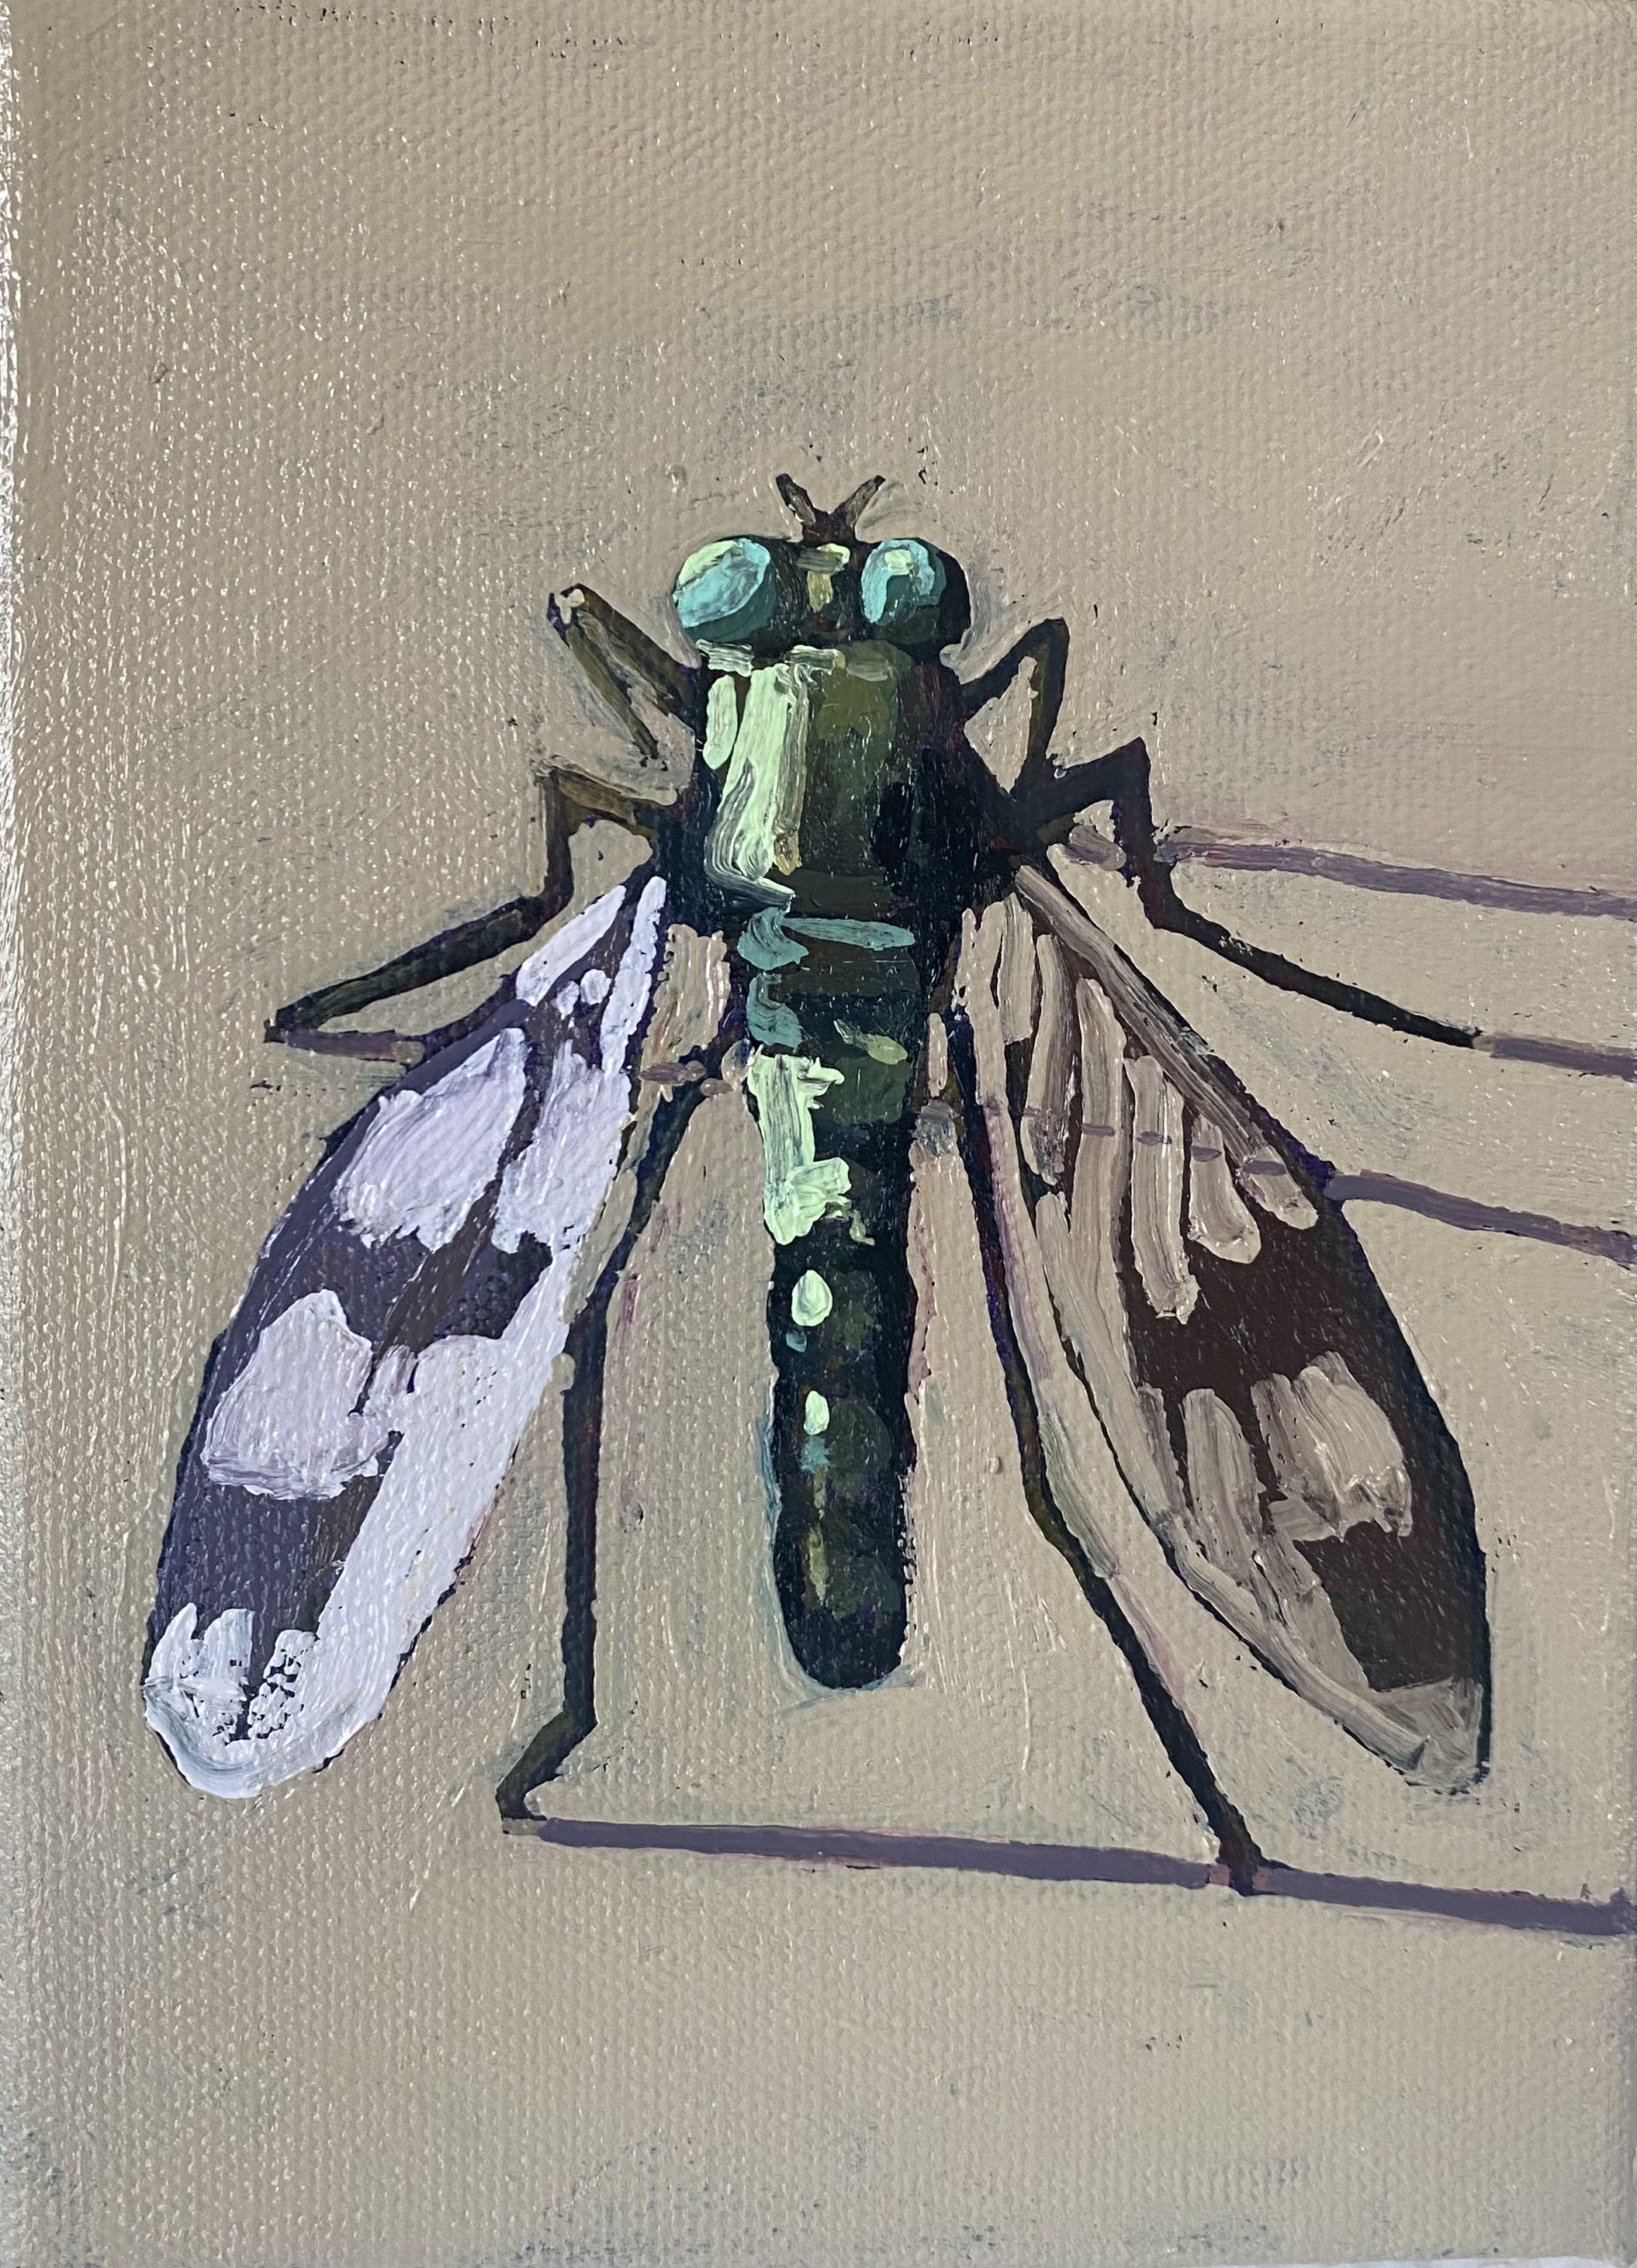 Little Fly by Andrea Wilson